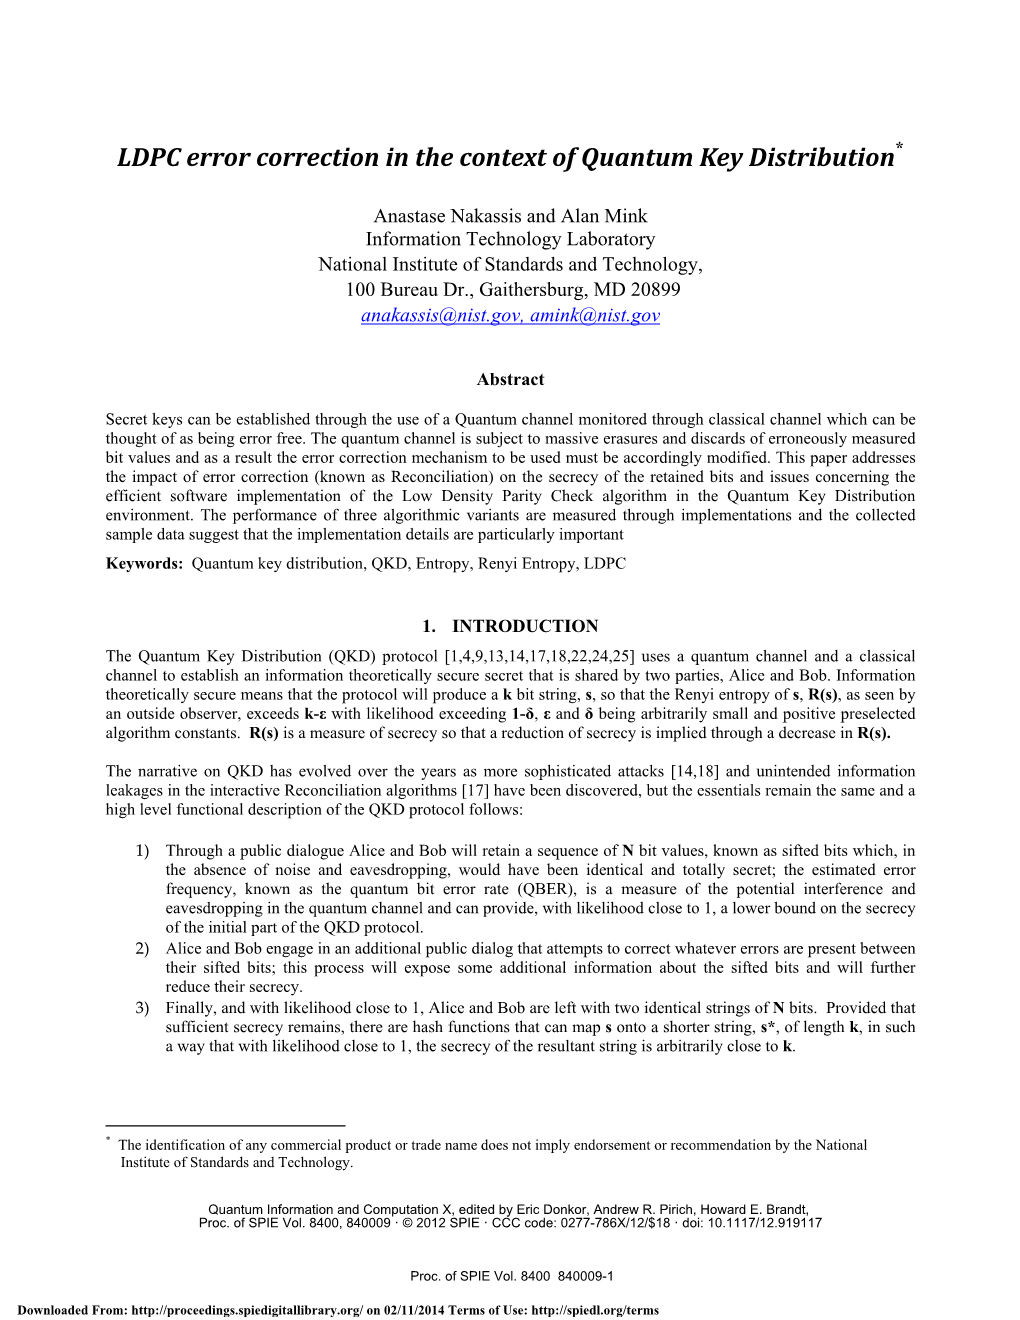 LDPC Error Correction in the Context of Quantum Key Distribution*